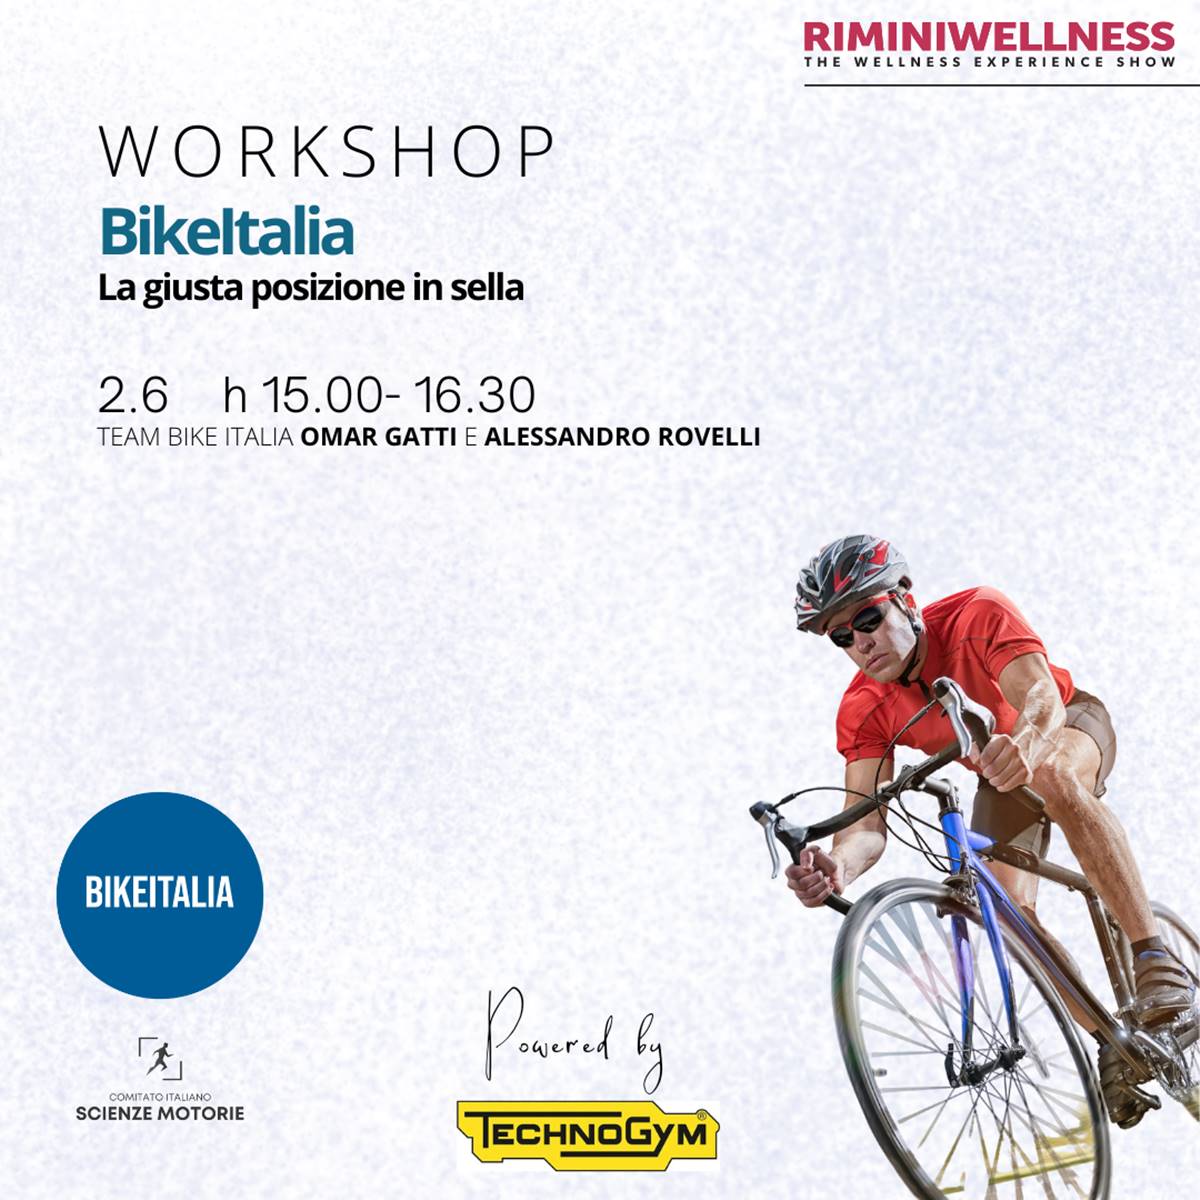 Workshop Bikeitalia al Rimini Wellness 2023